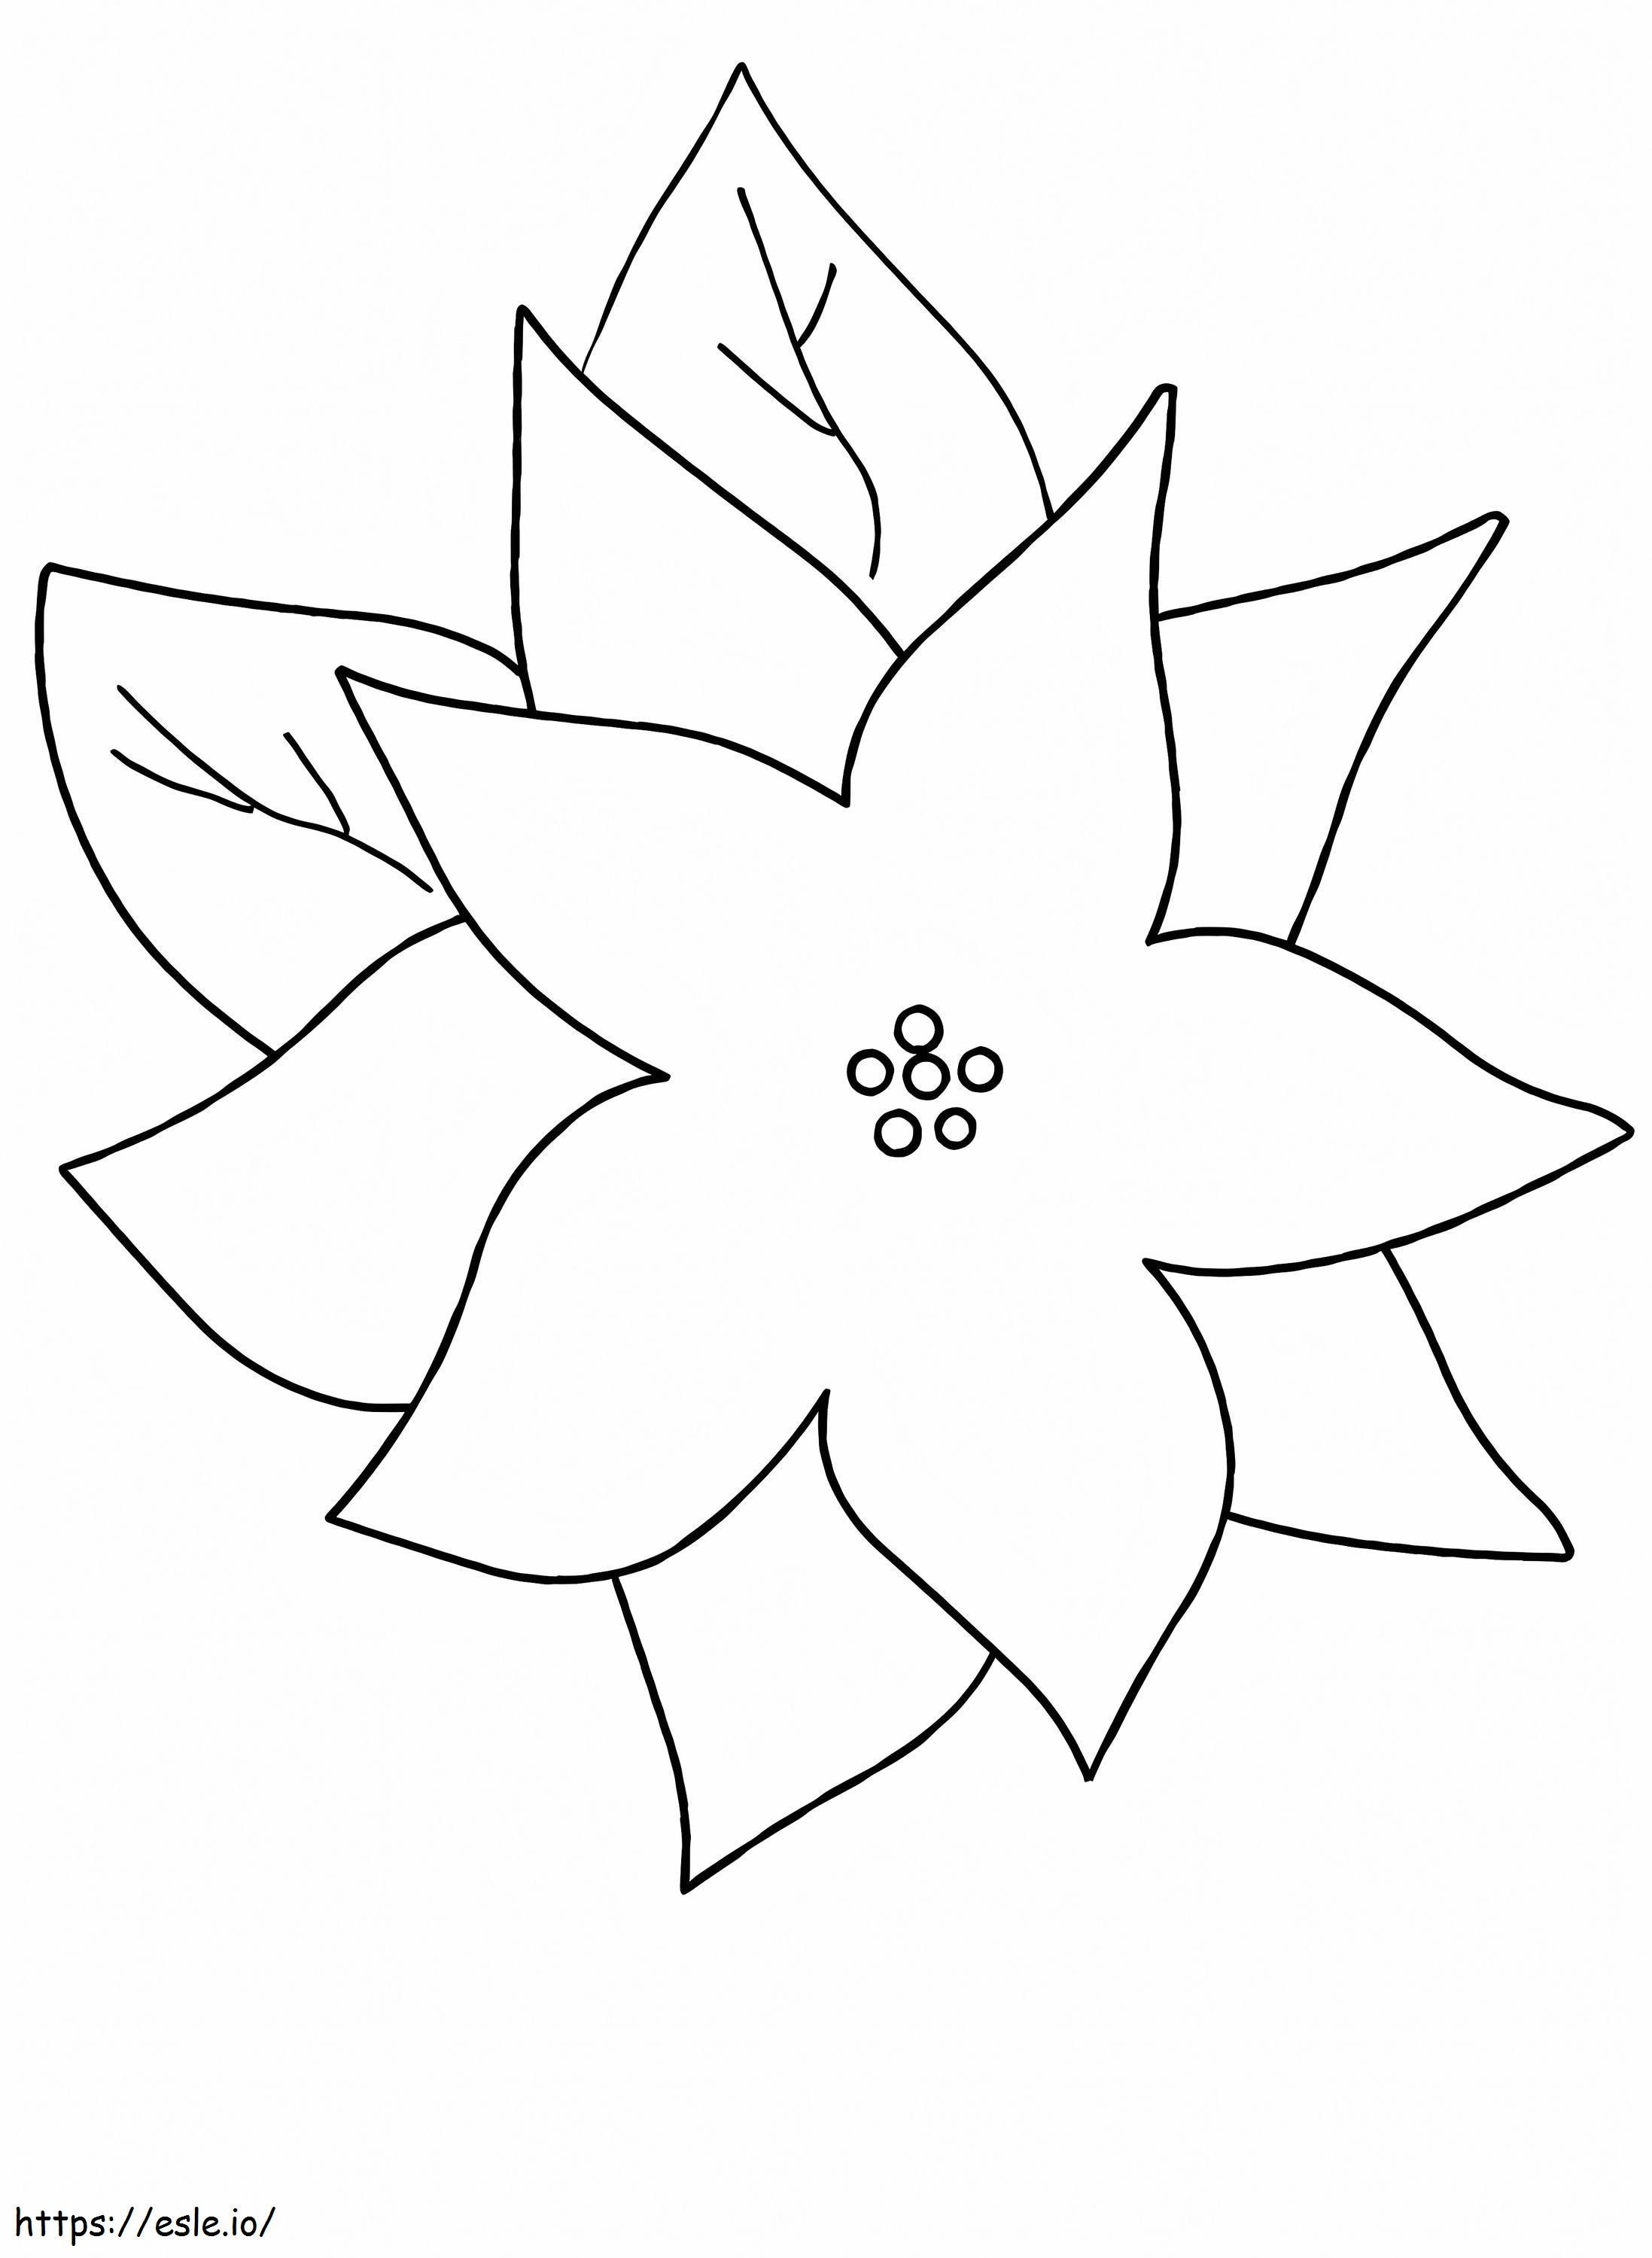 Grote Poinsettia-bloem kleurplaat kleurplaat